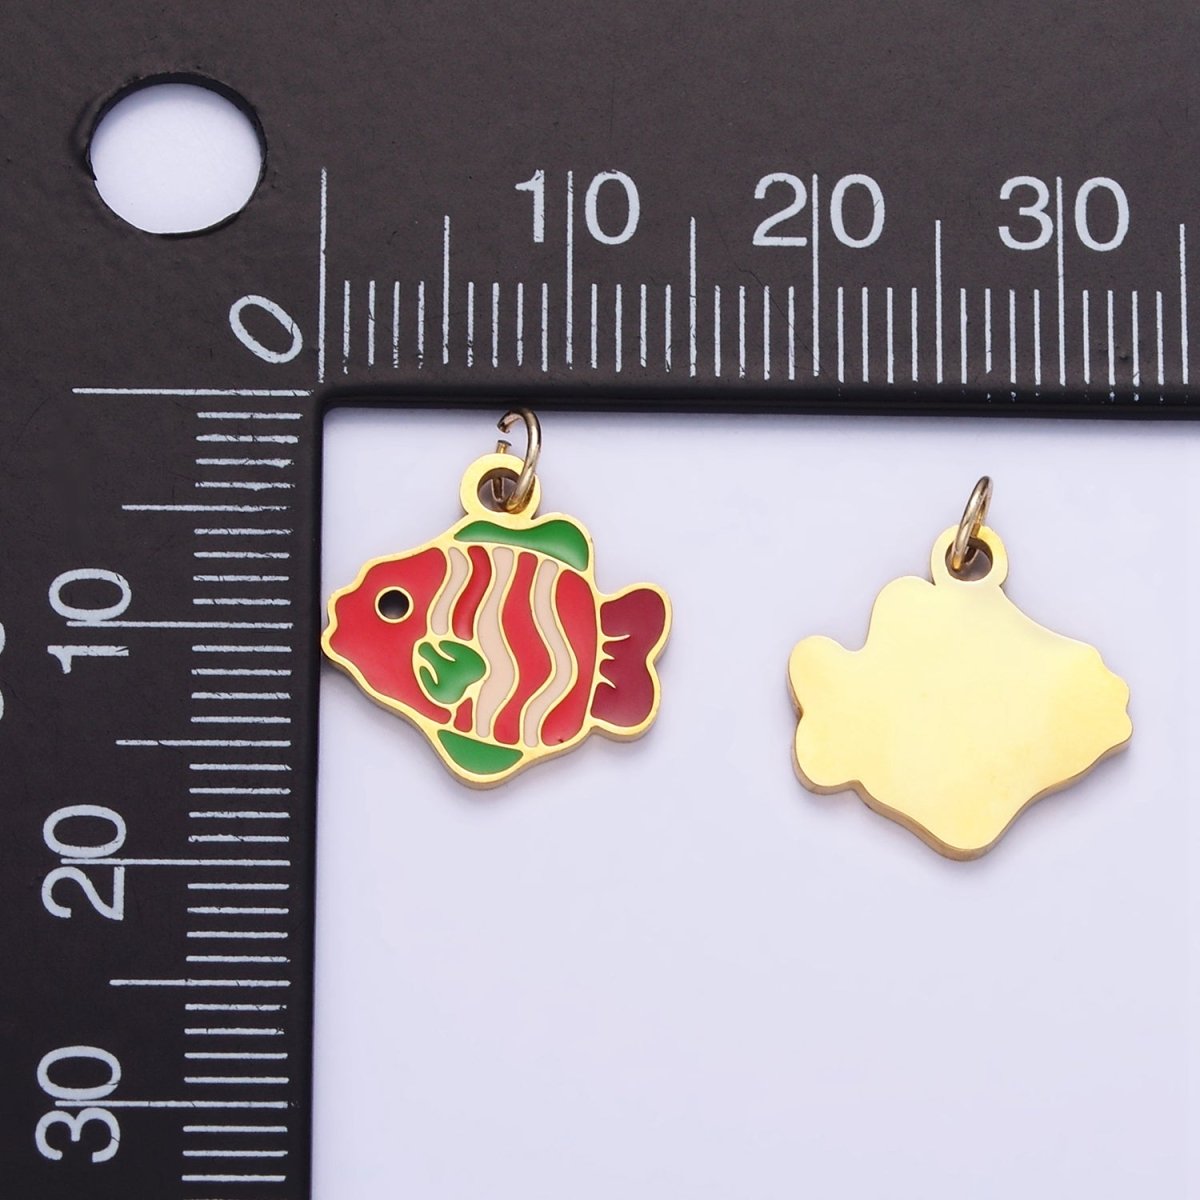 Stainless Steel Red Fish Charm Enamel Animal Jewelry Pendant | P1010 - DLUXCA